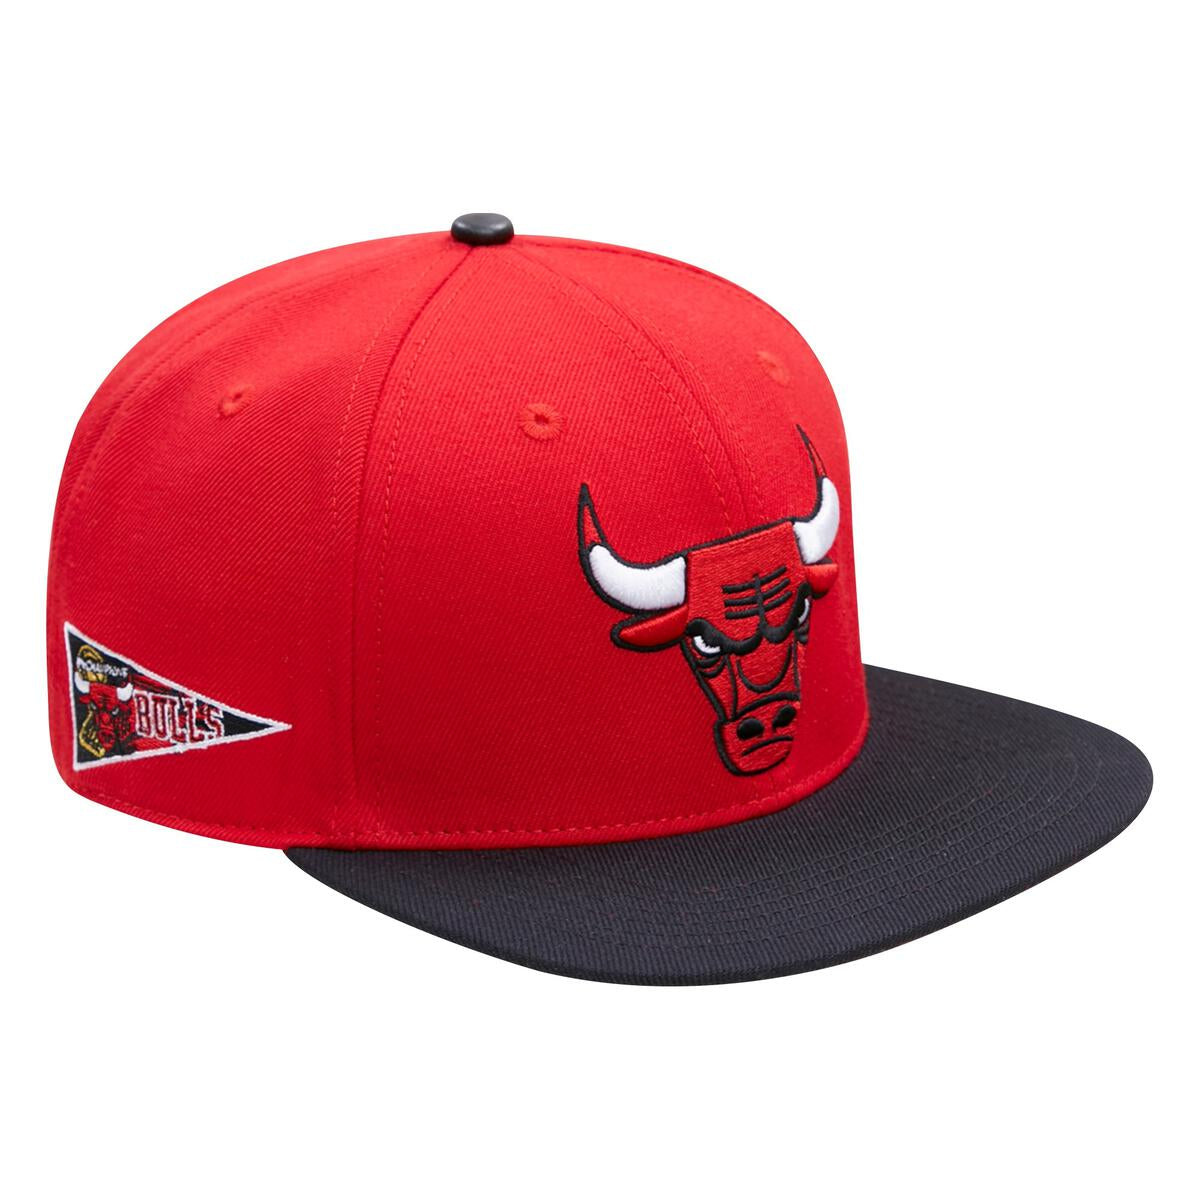 Pro Standard - Chicago Bulls Retro Classic Snapback Hat - Red/Black